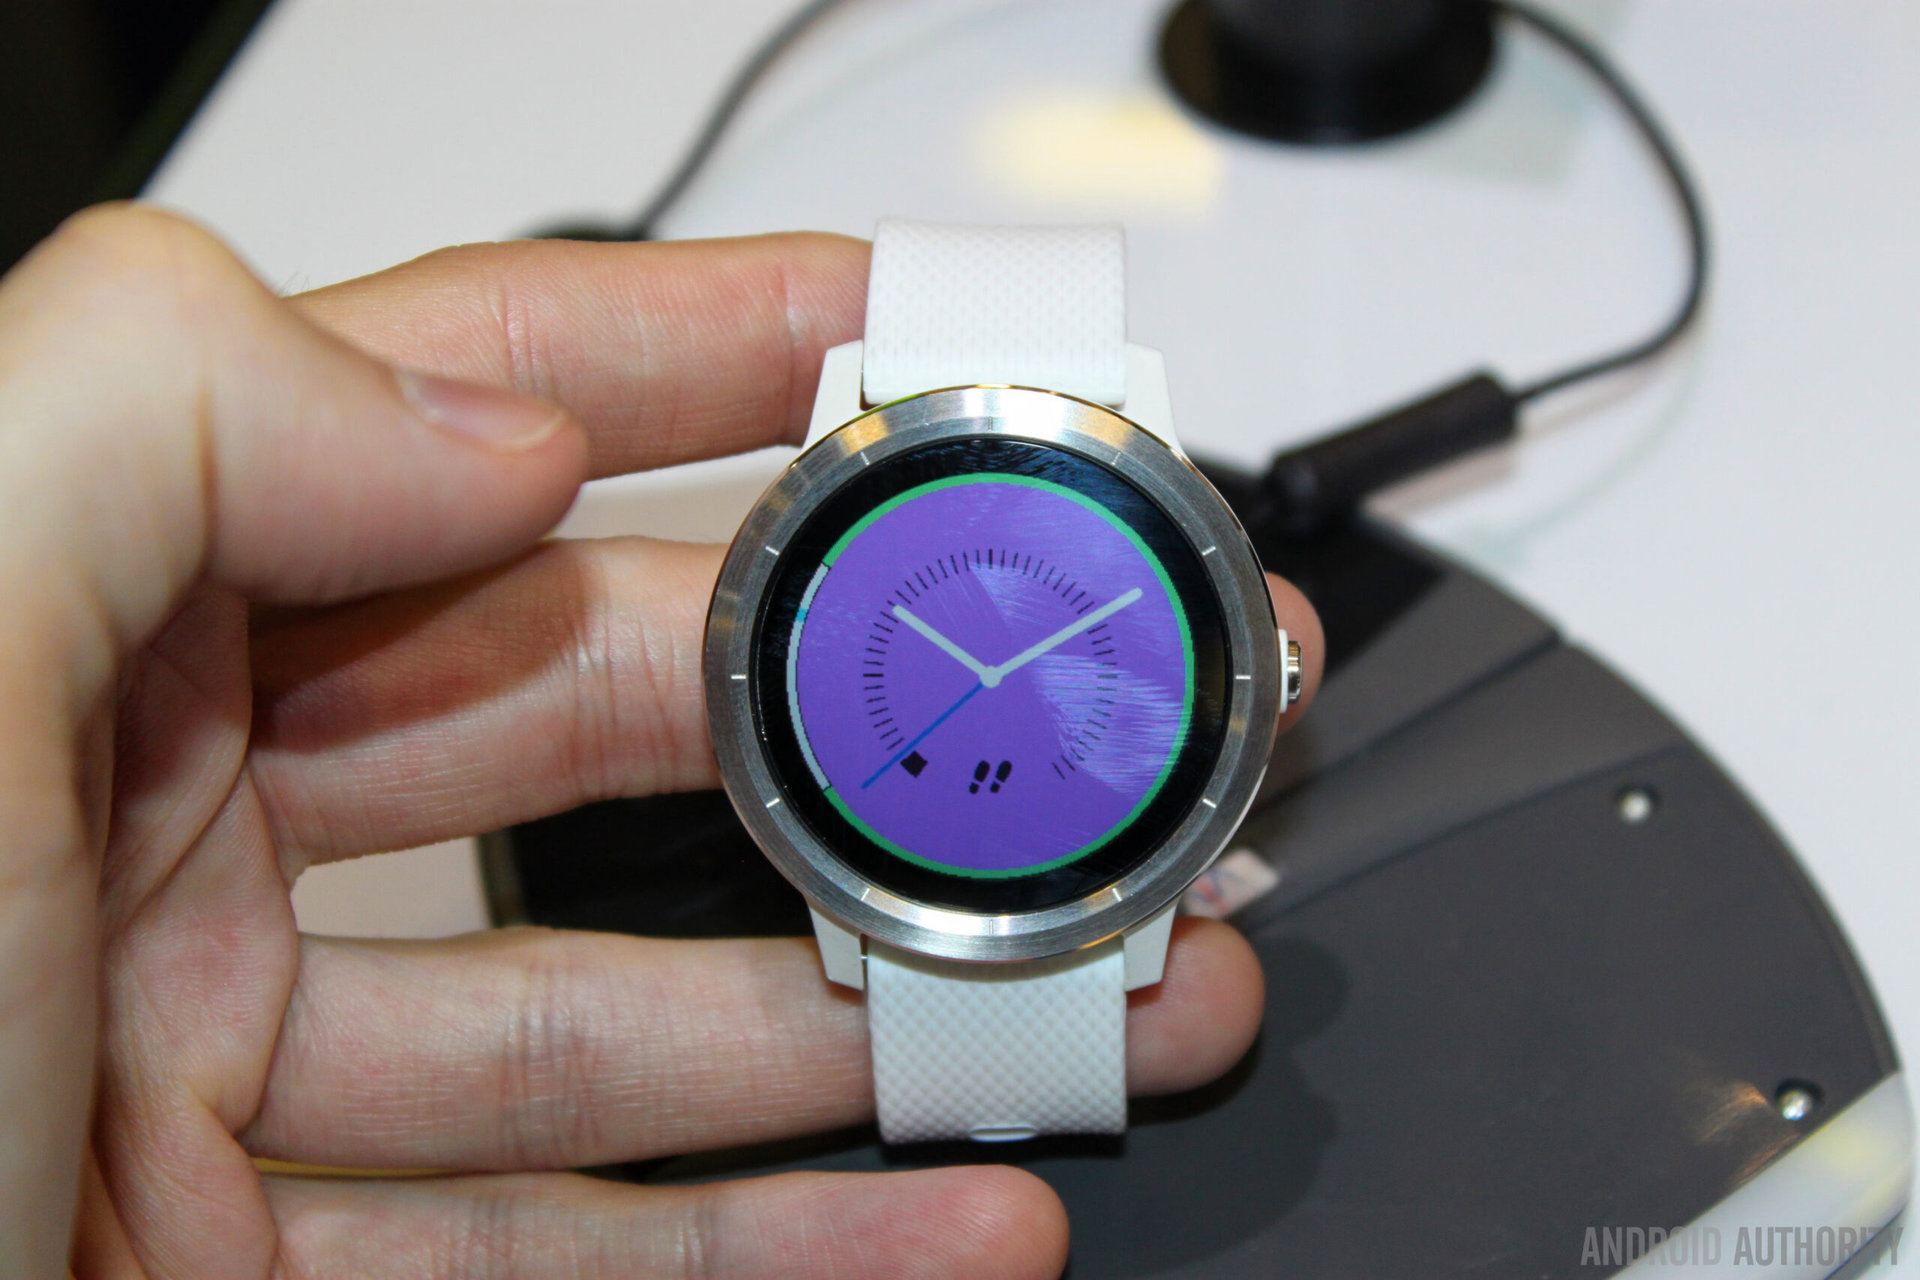 Garmin introduces vívoactive 3, a stylish smartwatch with new Garmin Pay